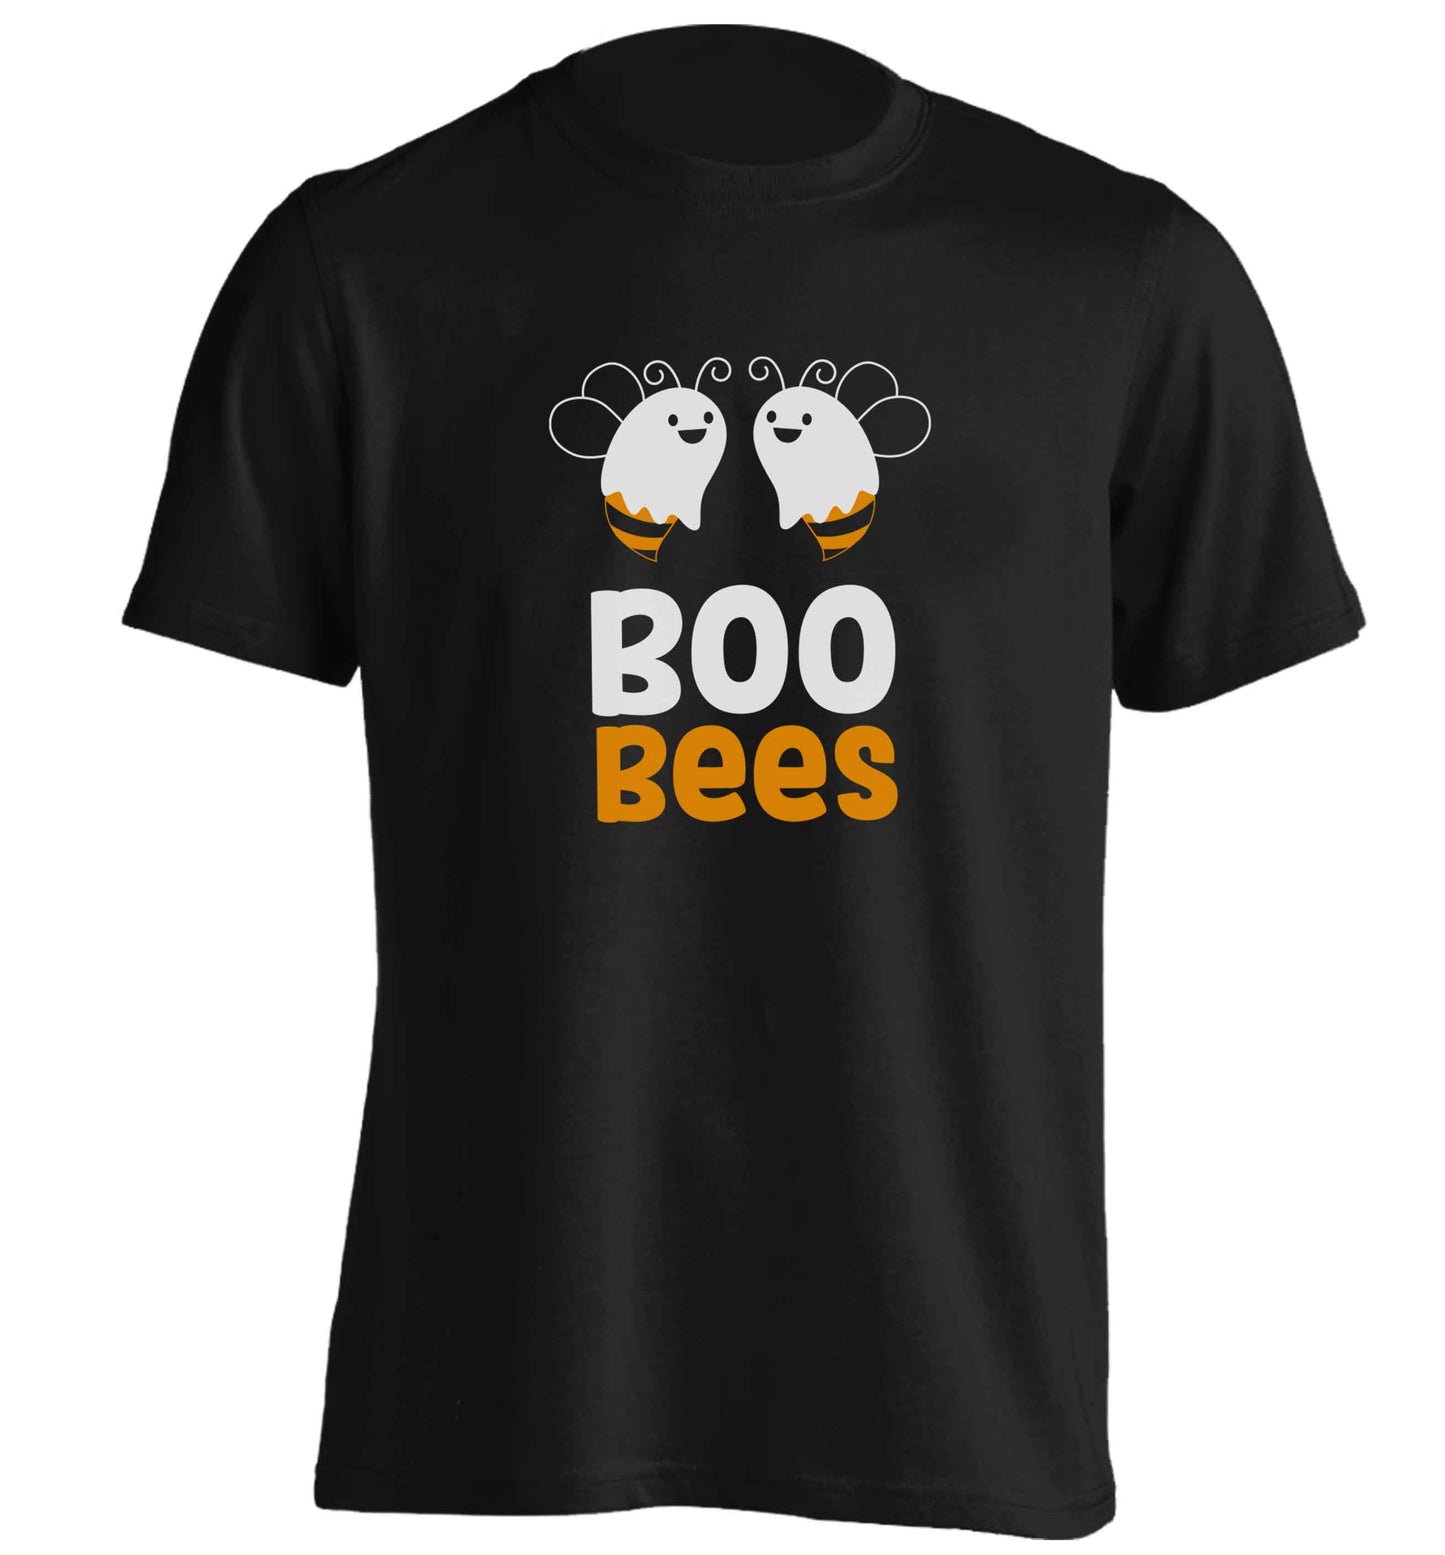 Boo bees Kit adults unisex black Tshirt 2XL